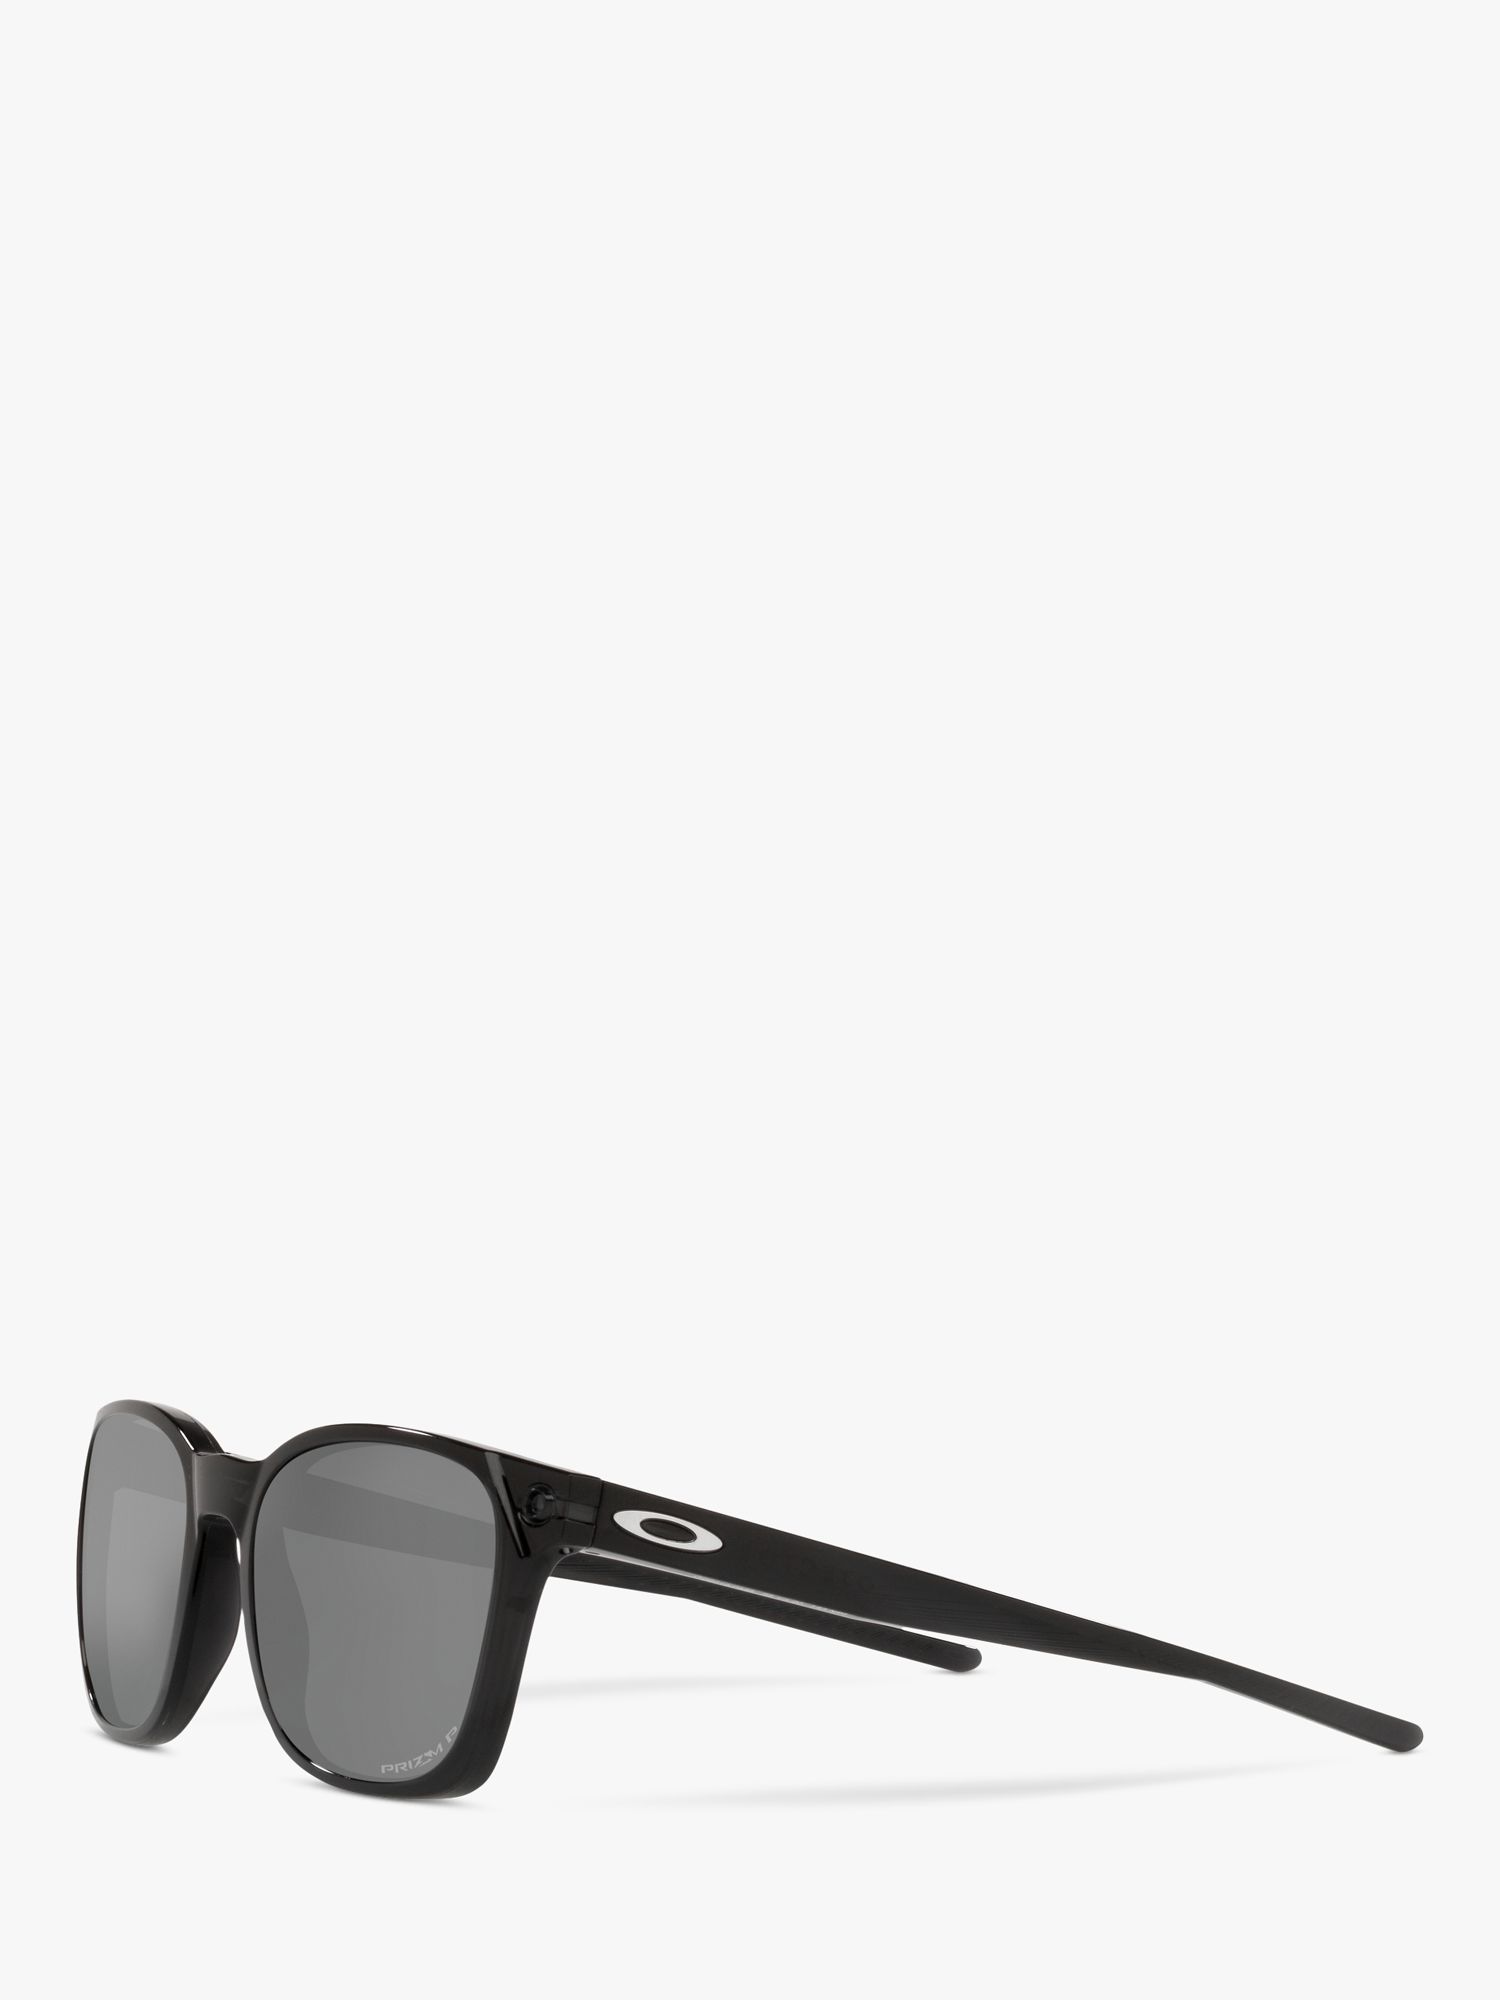 Buy Oakley OO9018 Men's Objector Polarised Sunglasses, Black Ink/Grey Online at johnlewis.com